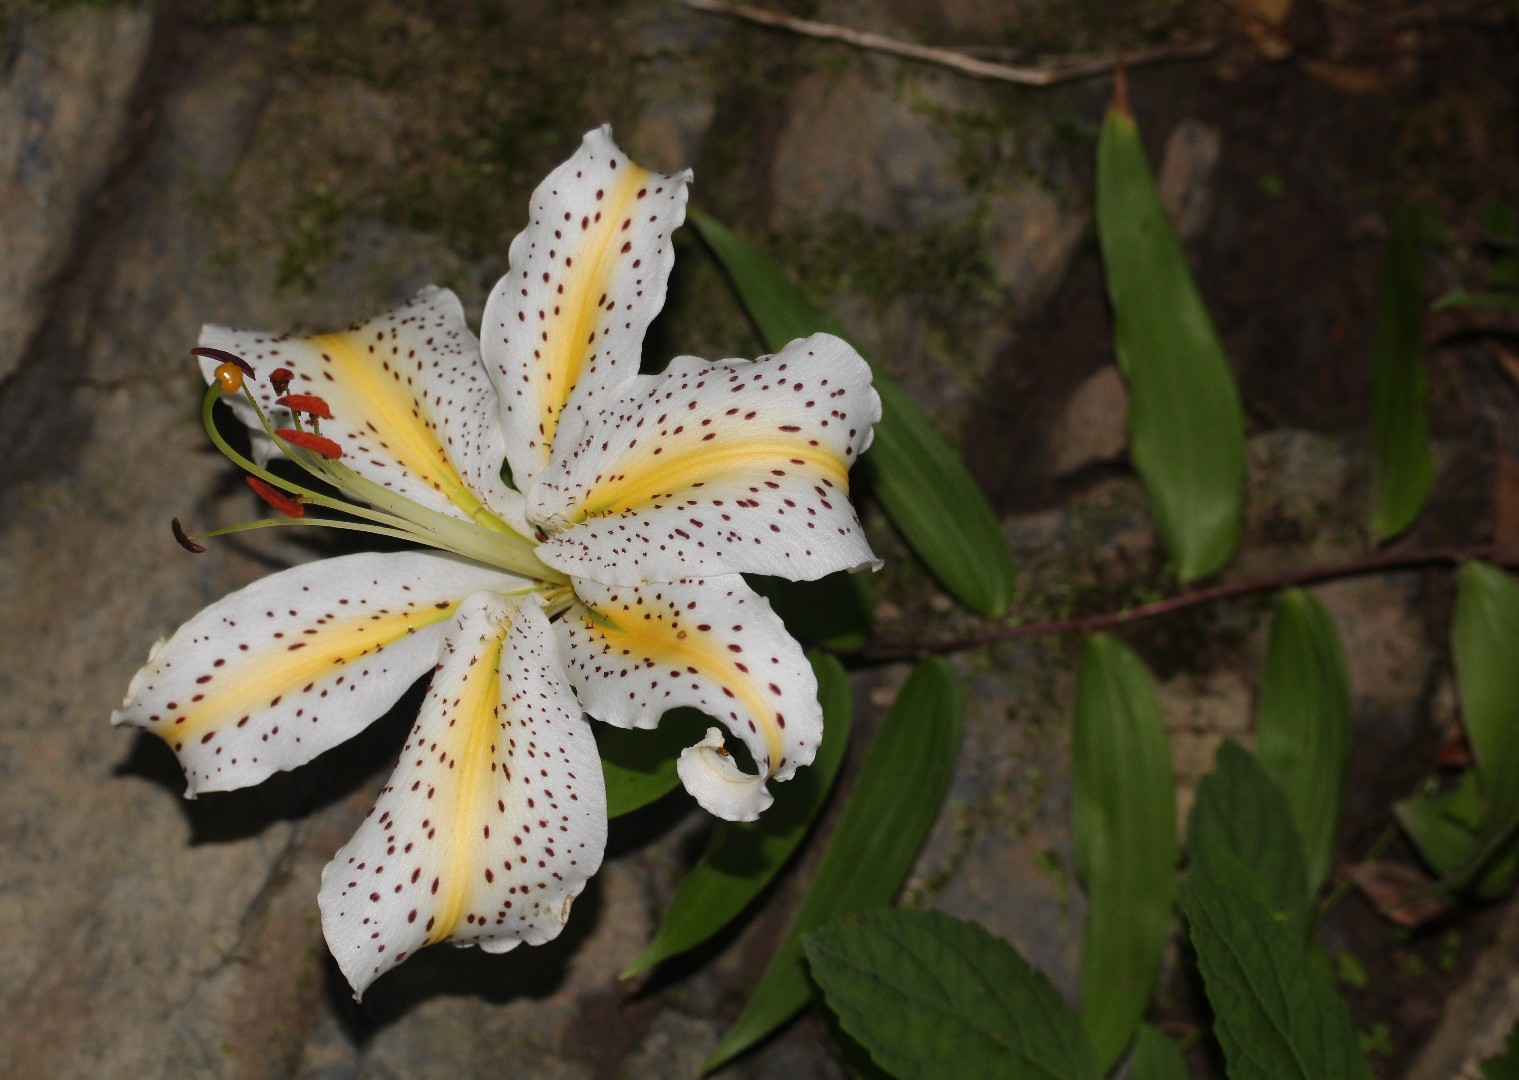 Golden-rayed lily (Lilium auratum) Flower, Leaf, Care, Uses - PictureThis